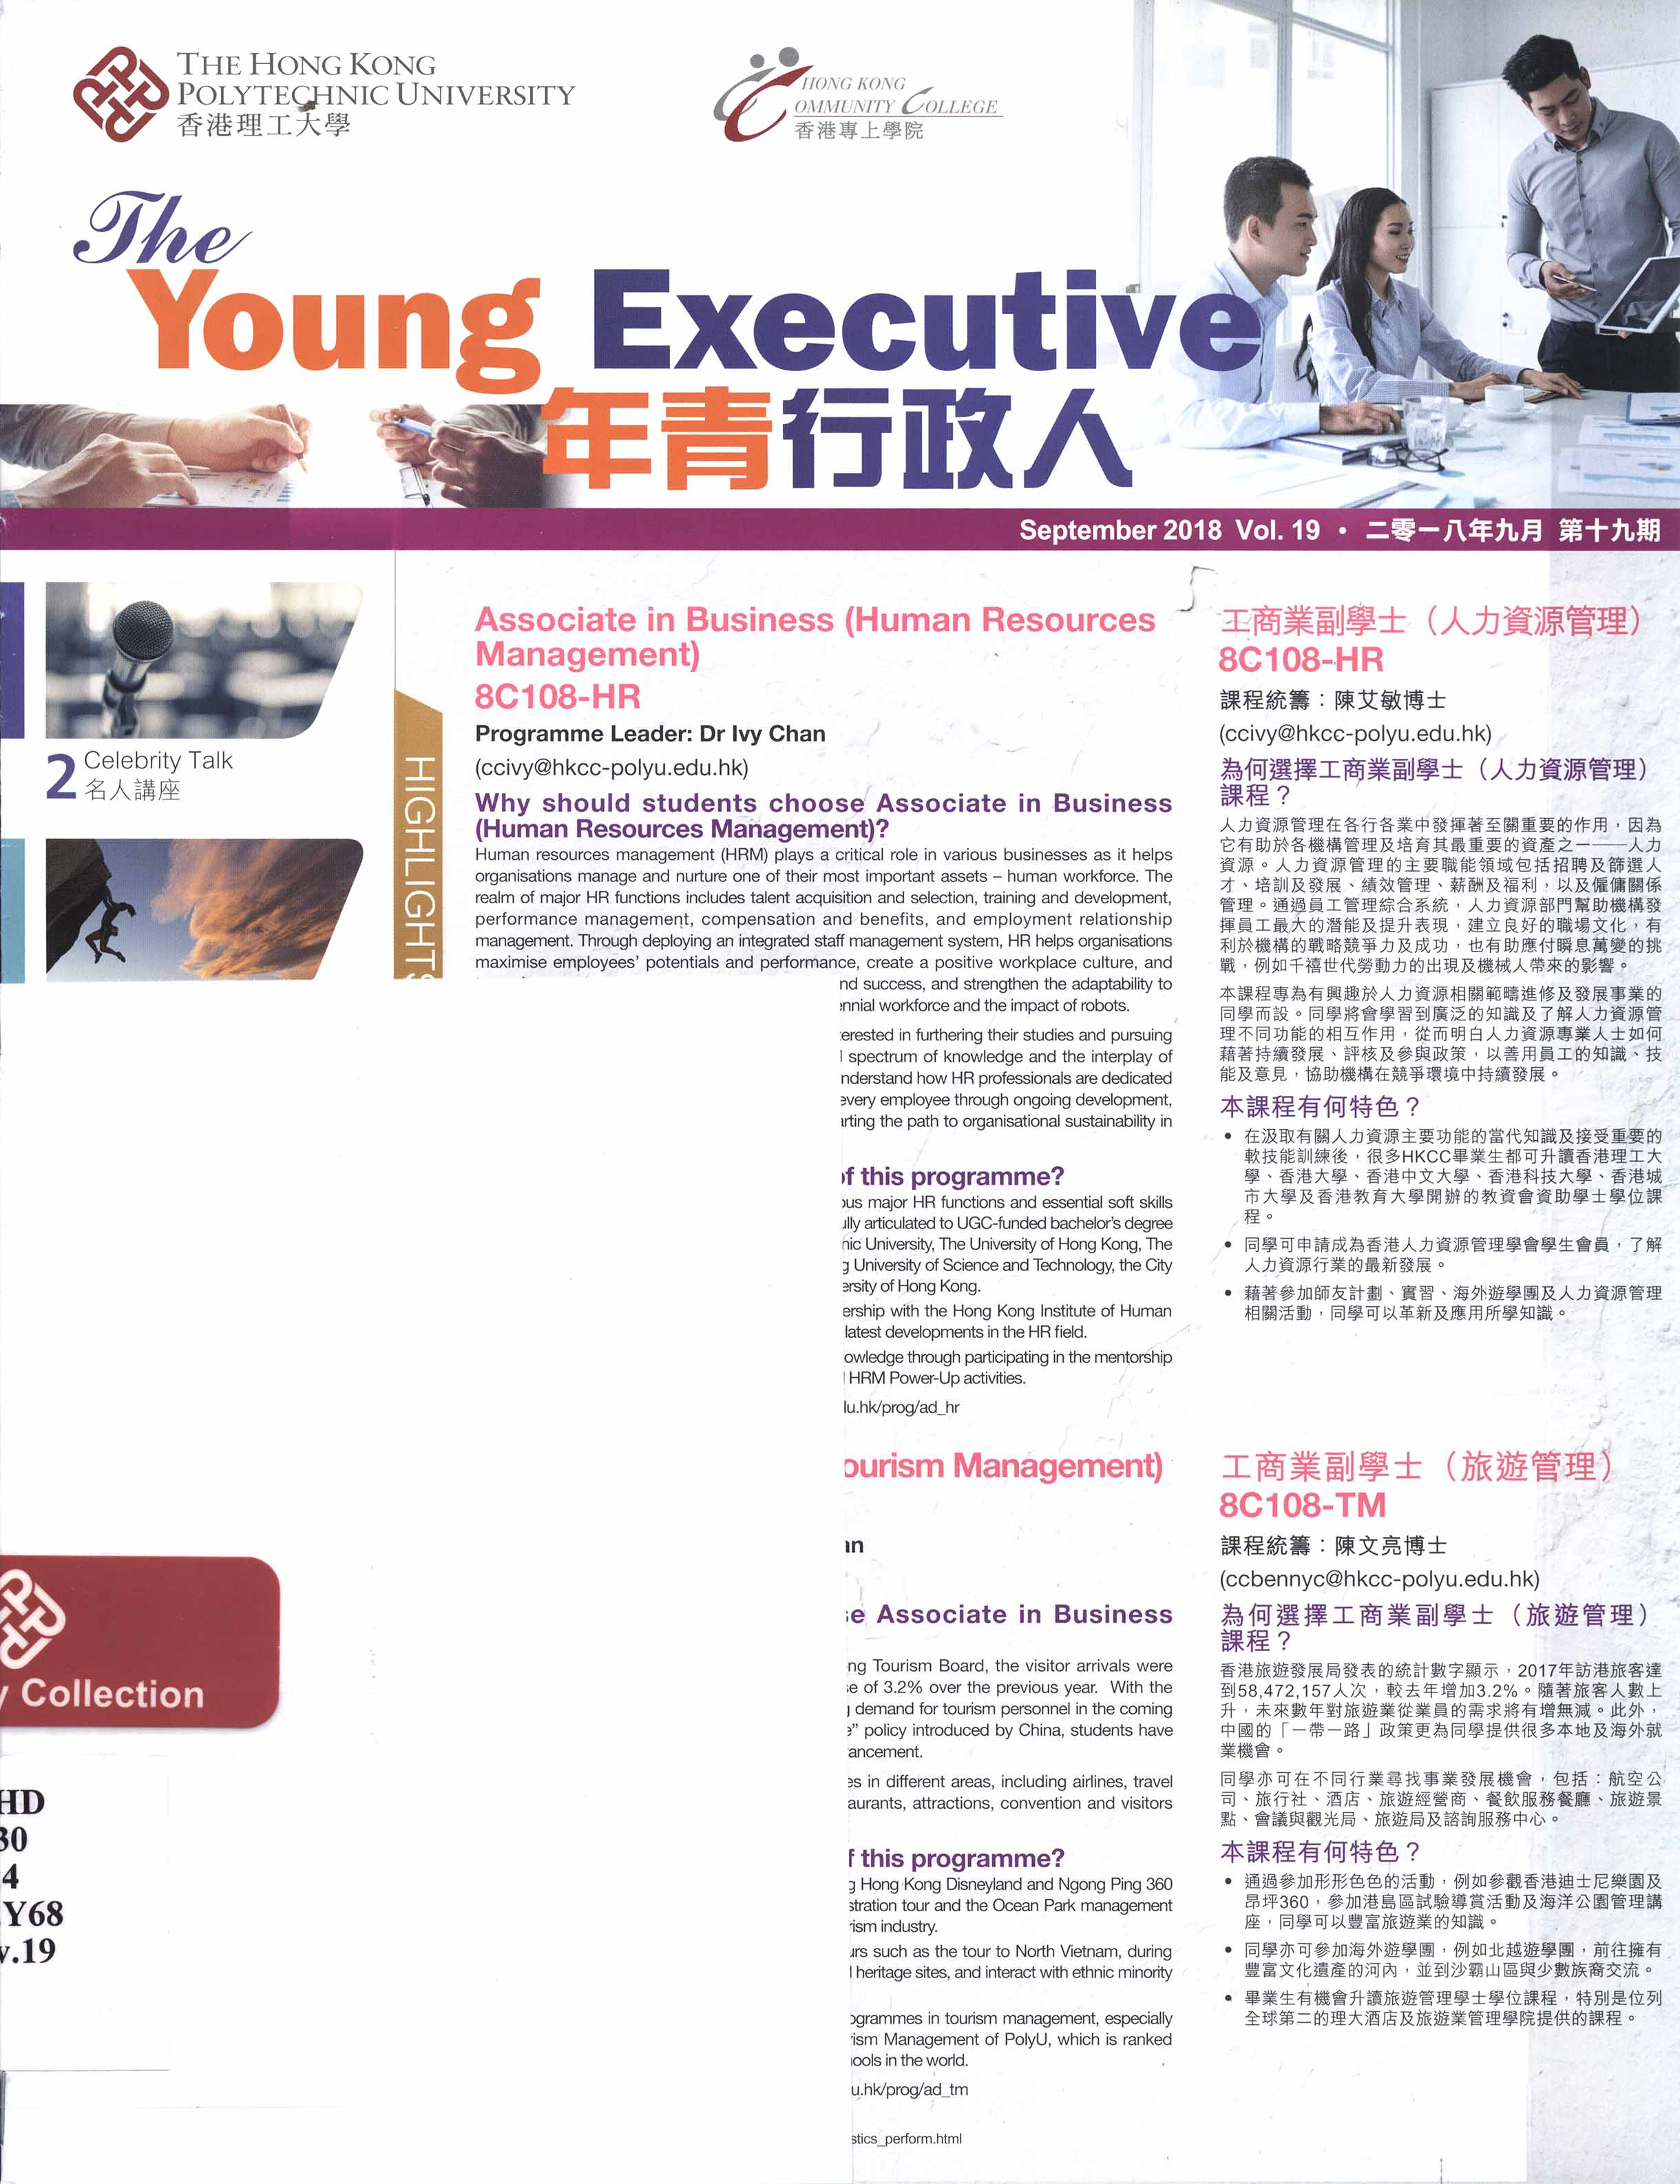 The Young executive. Vol. 19